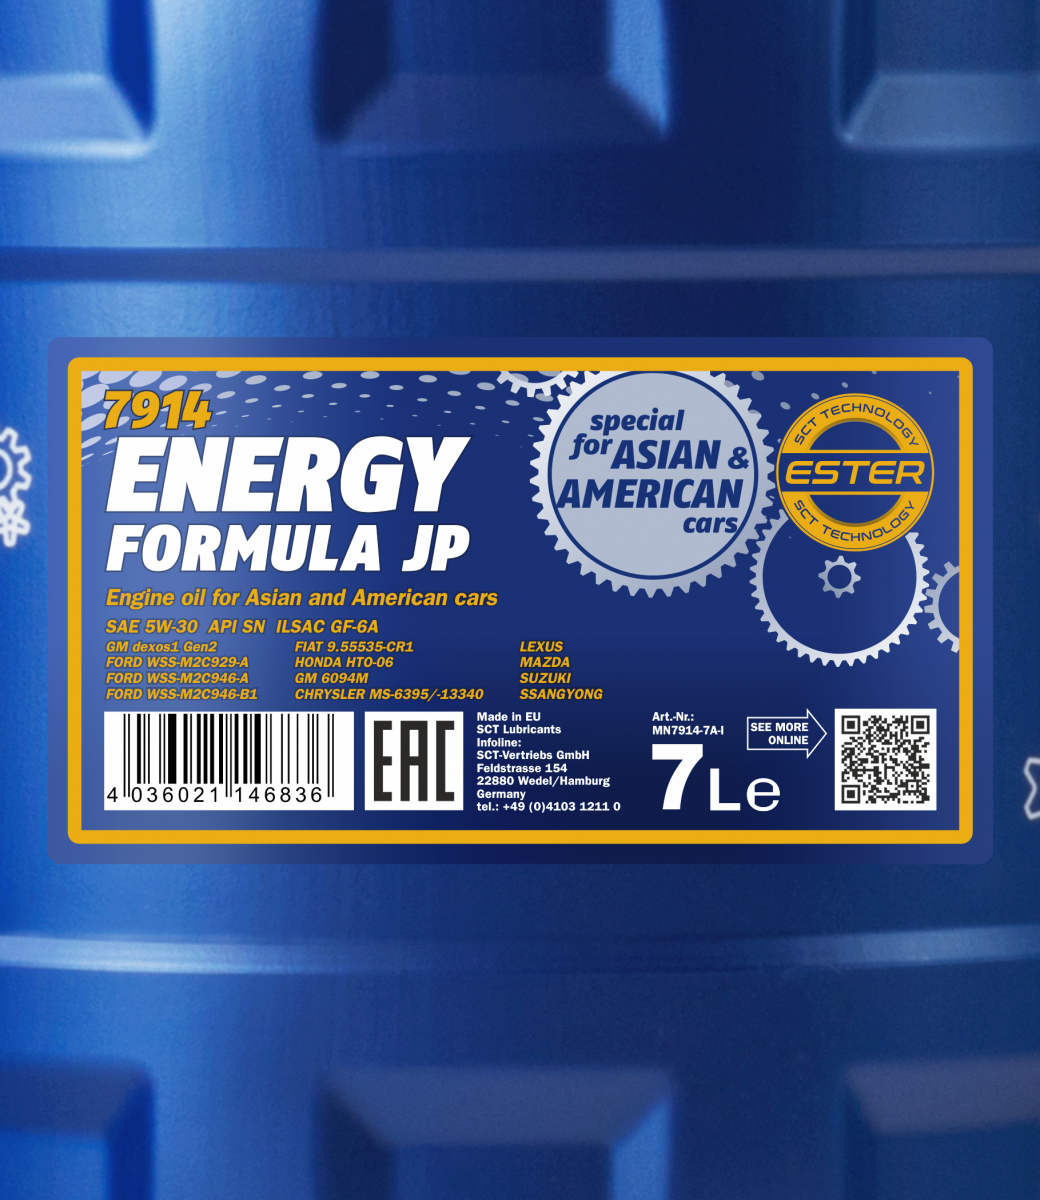 7914 mannol energy formula JP 5W30 4 L. (Metal) synthetic engine oil 5W-30